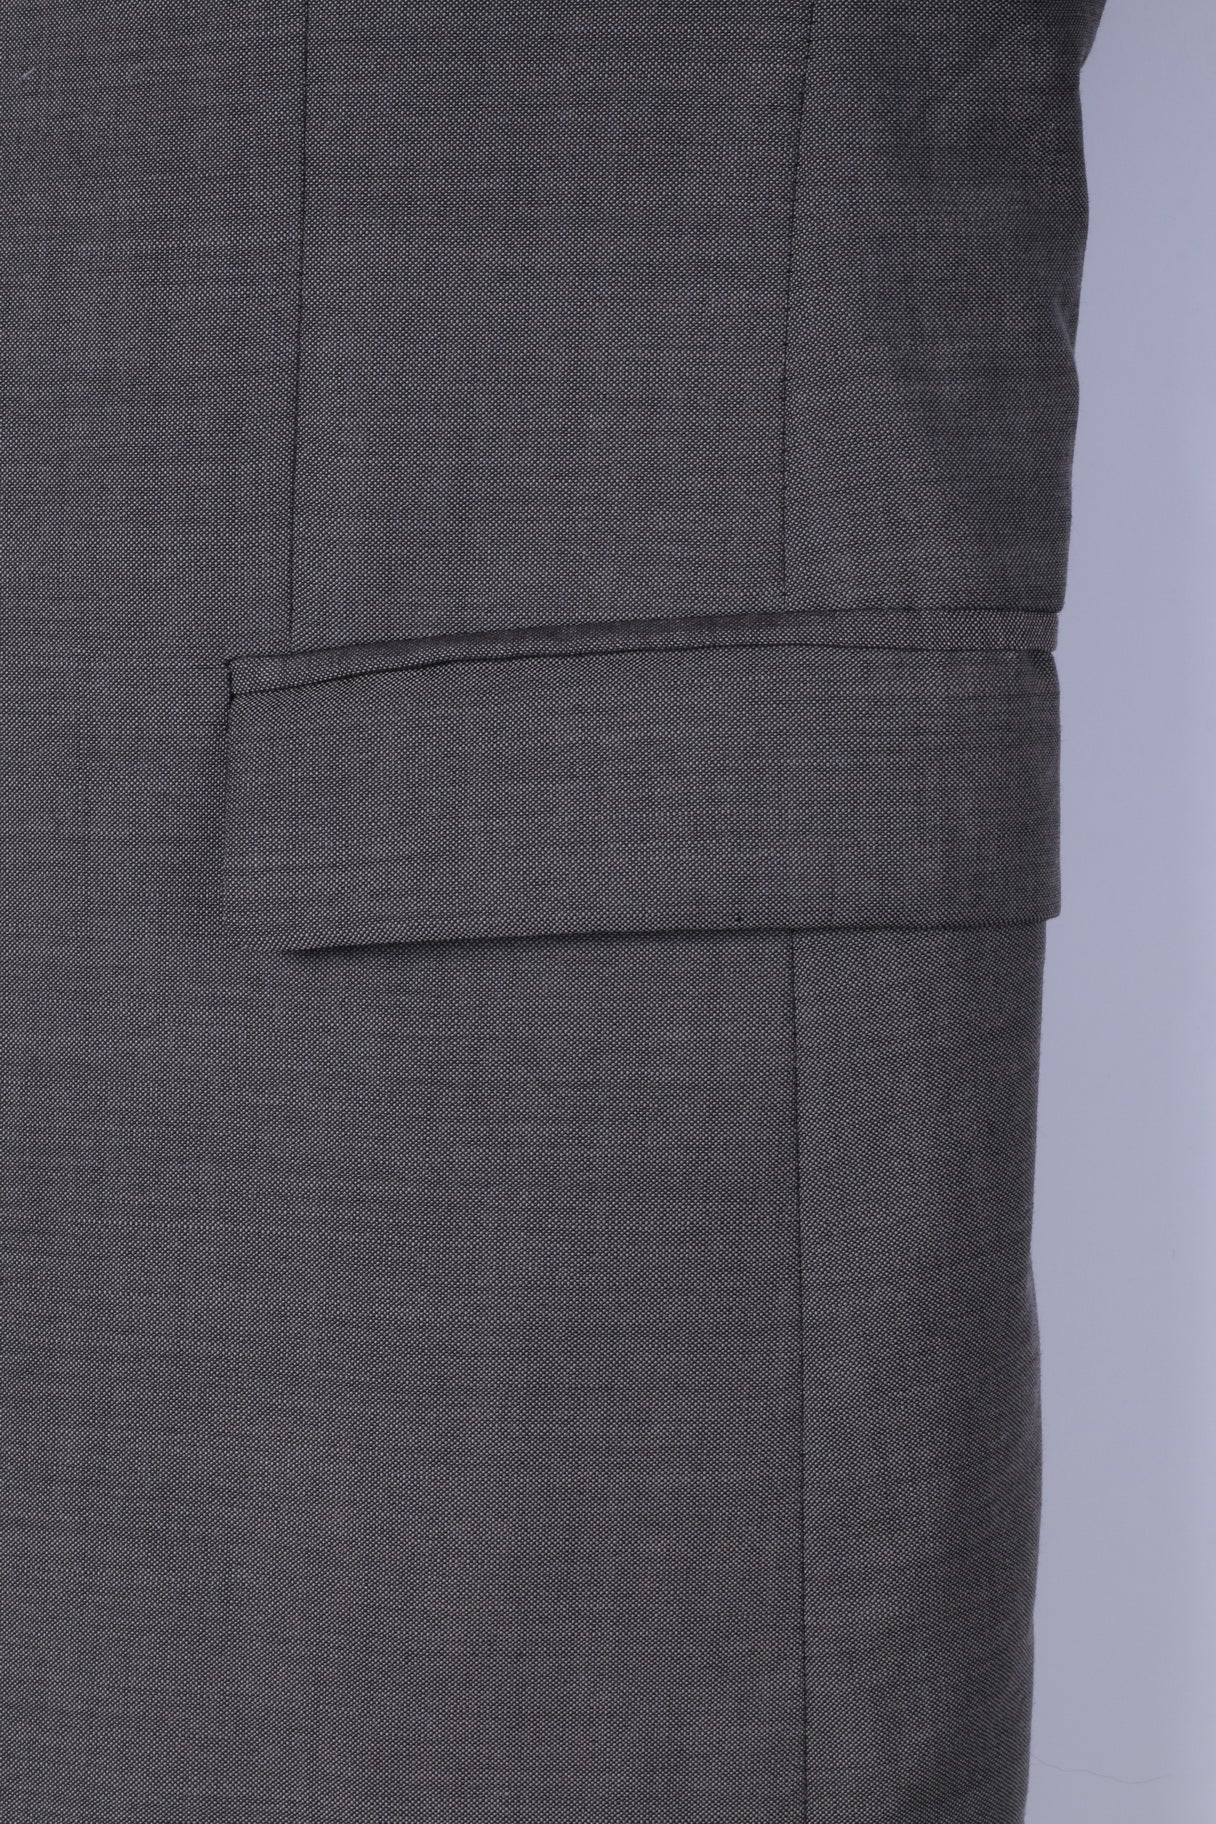 Strellson Men 94 36 S Blazer Grey Wool Rick James Premium Single Breasted Jacket